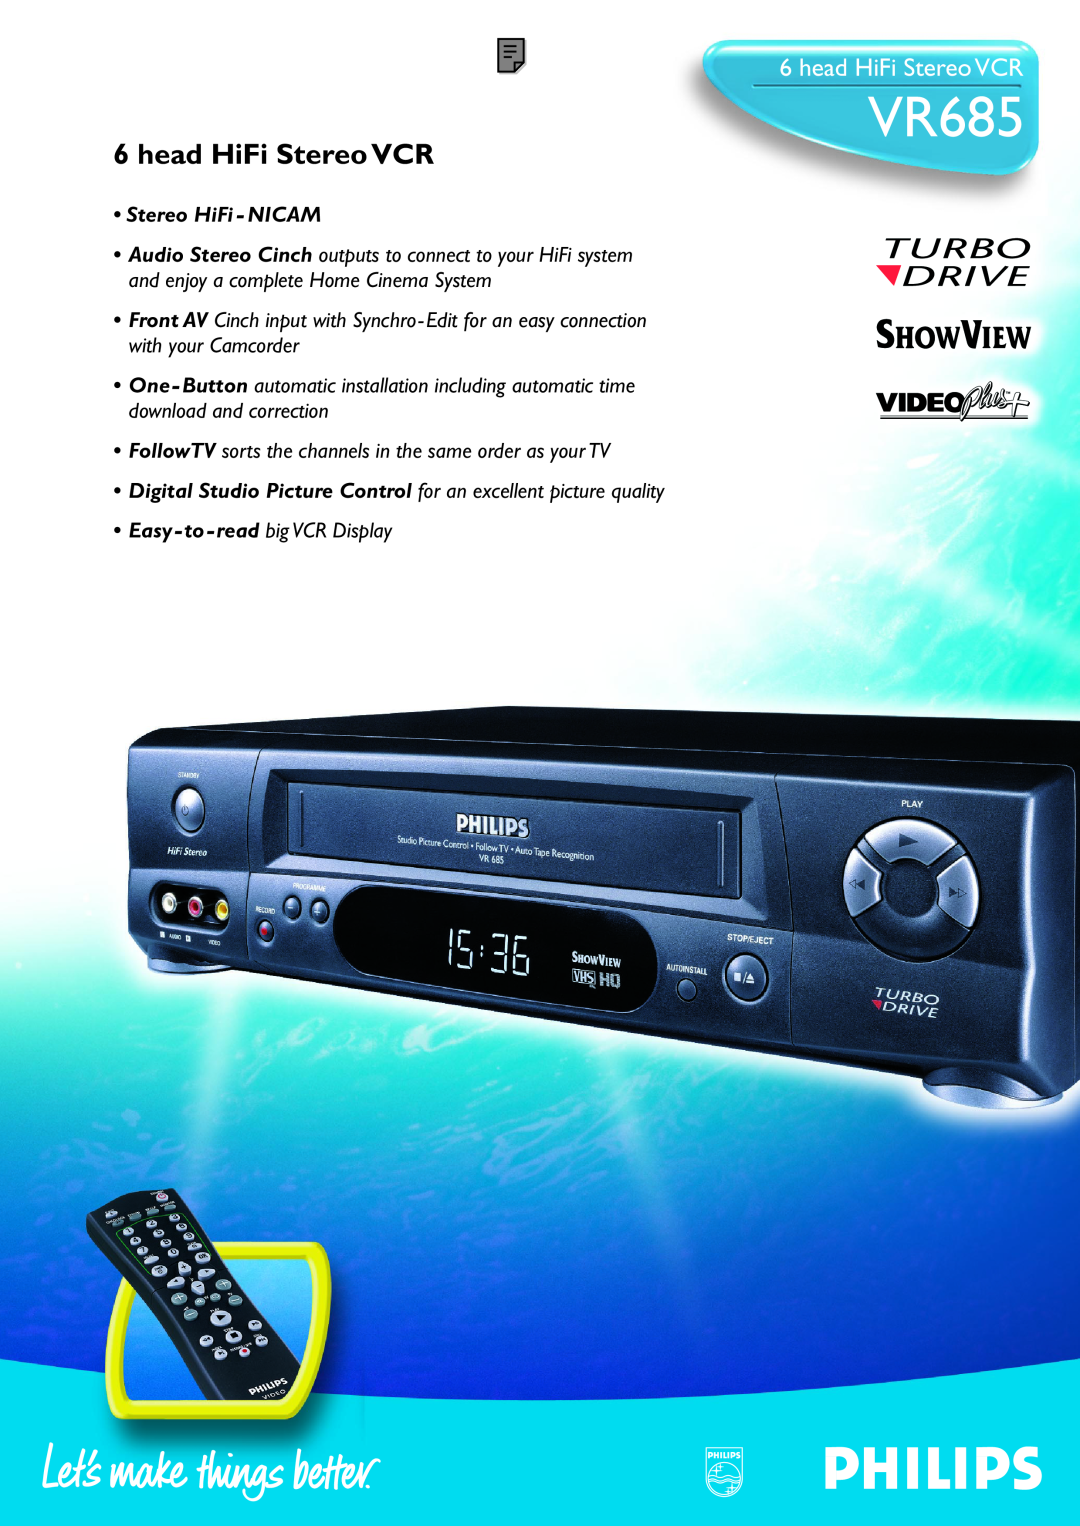 Philips VR689 manual VR685, head HiFi Stereo VCR, Stereo HiFi - NICAM, Easy - to - read big VCR Display 